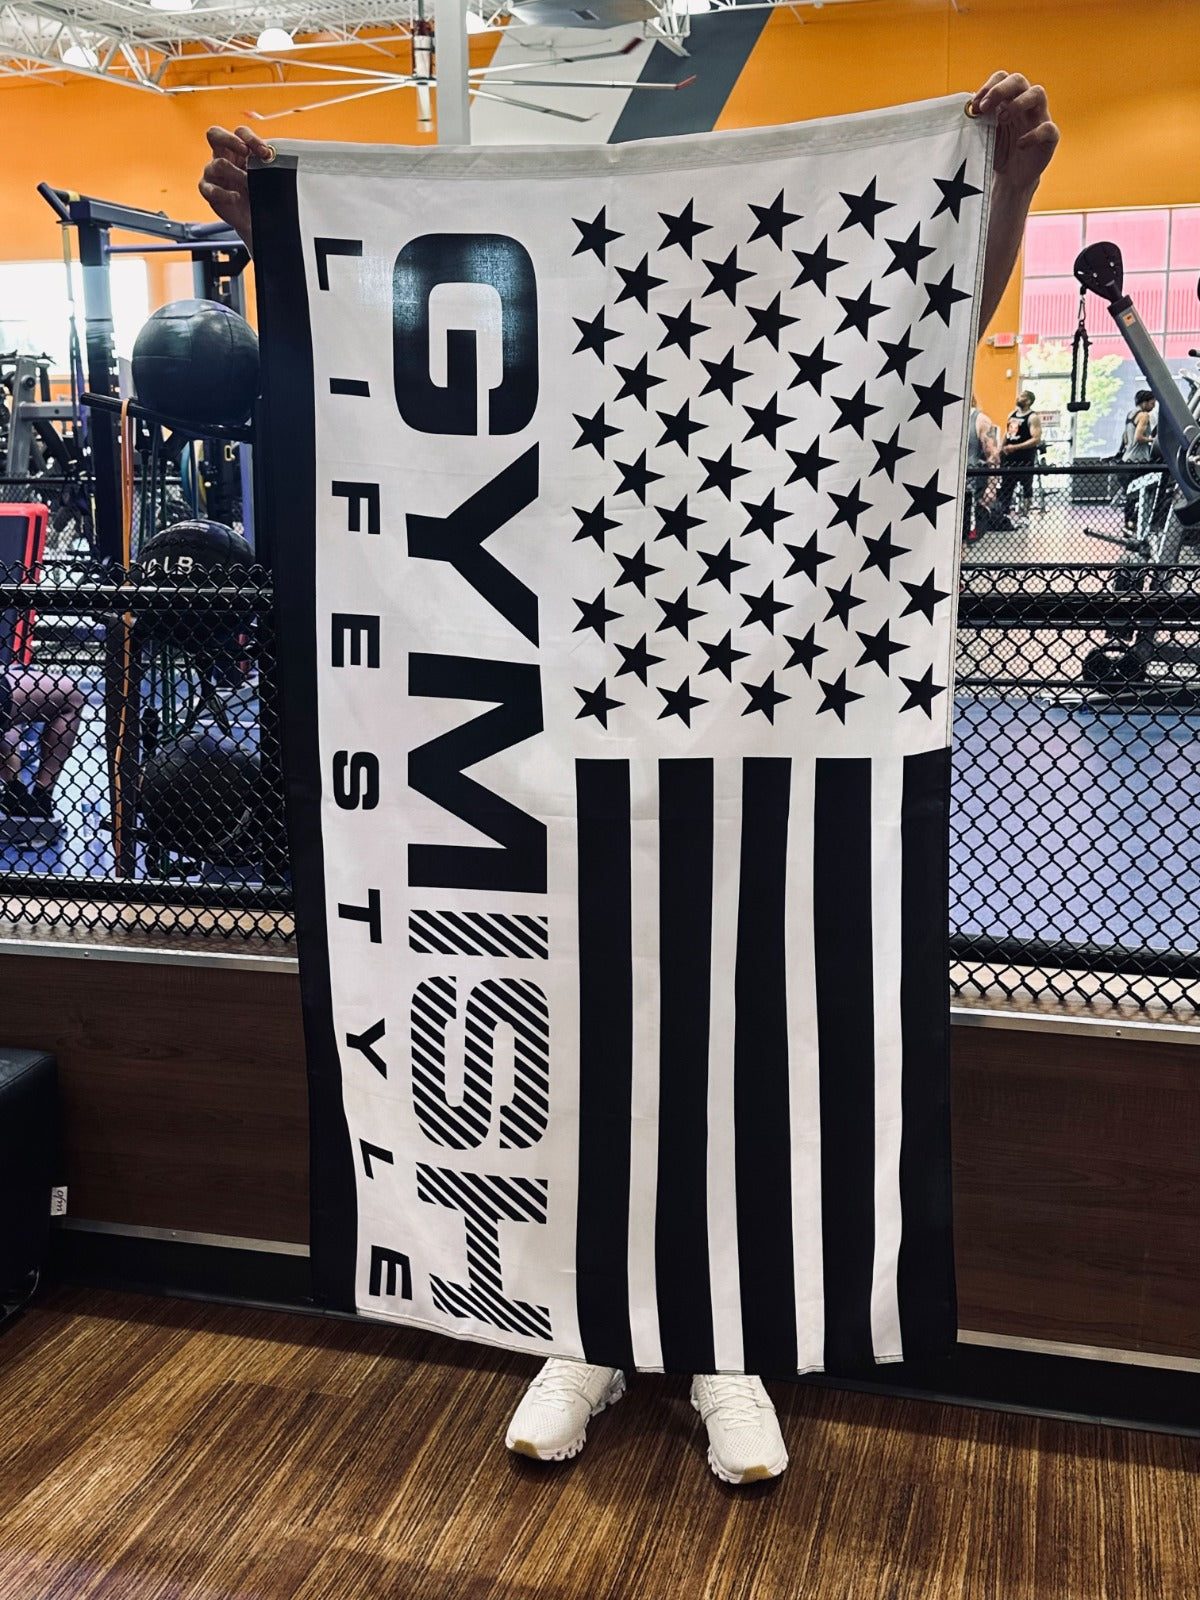 Gymish Lifestyle Flag, 5x3 ft Workout Flag for Home Gym Motivational Flag